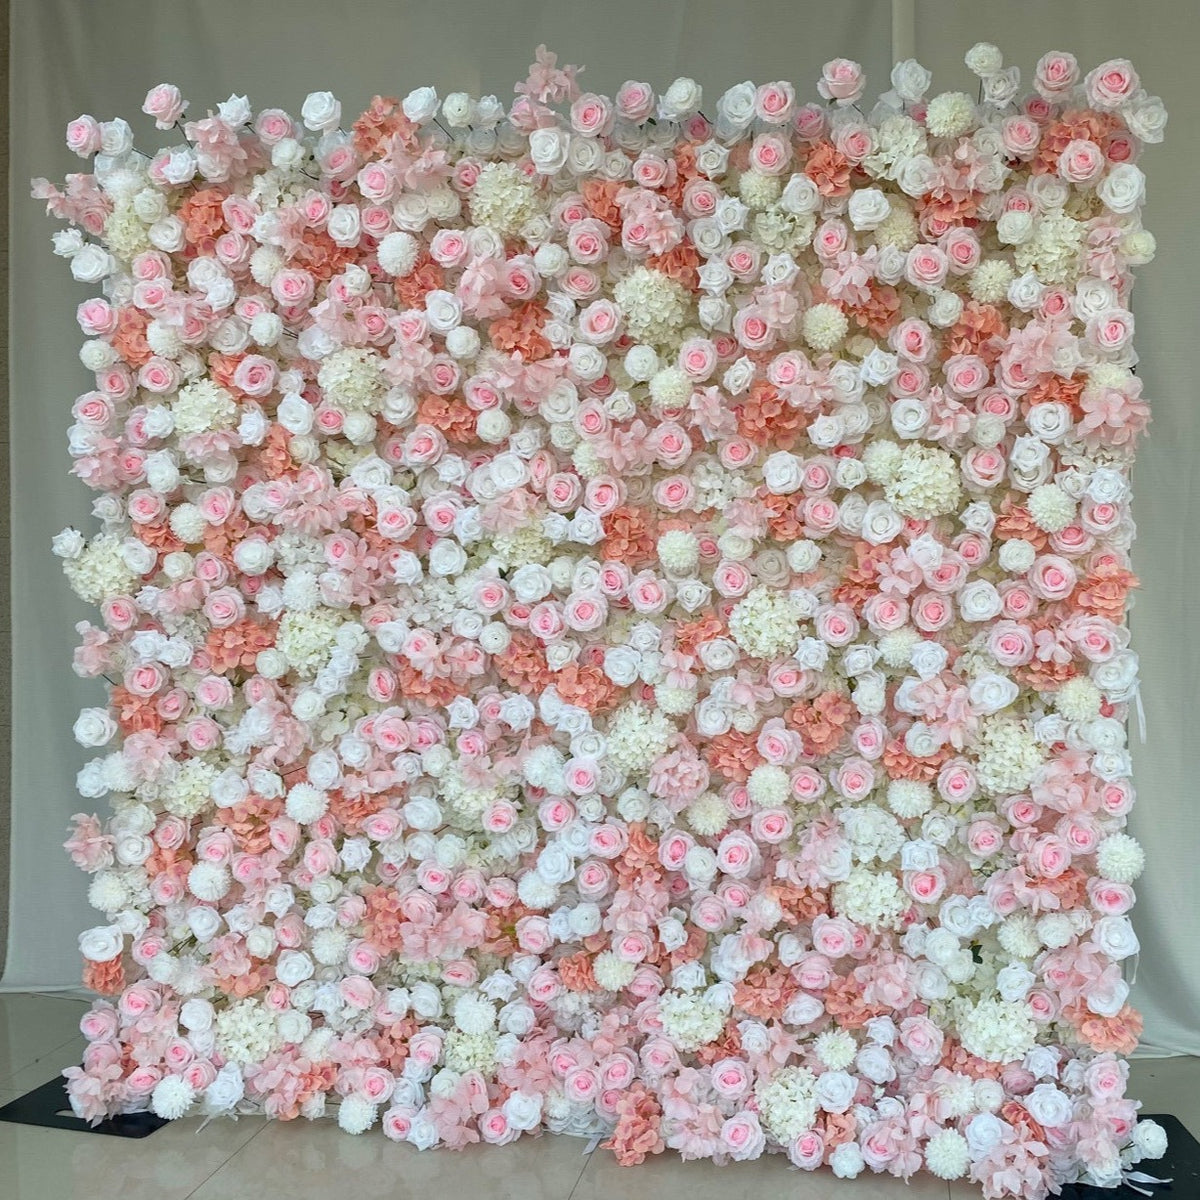 3D Artificial Flower Wall Arrangement Wedding Party Birthday Backdrop Decor HQ5994